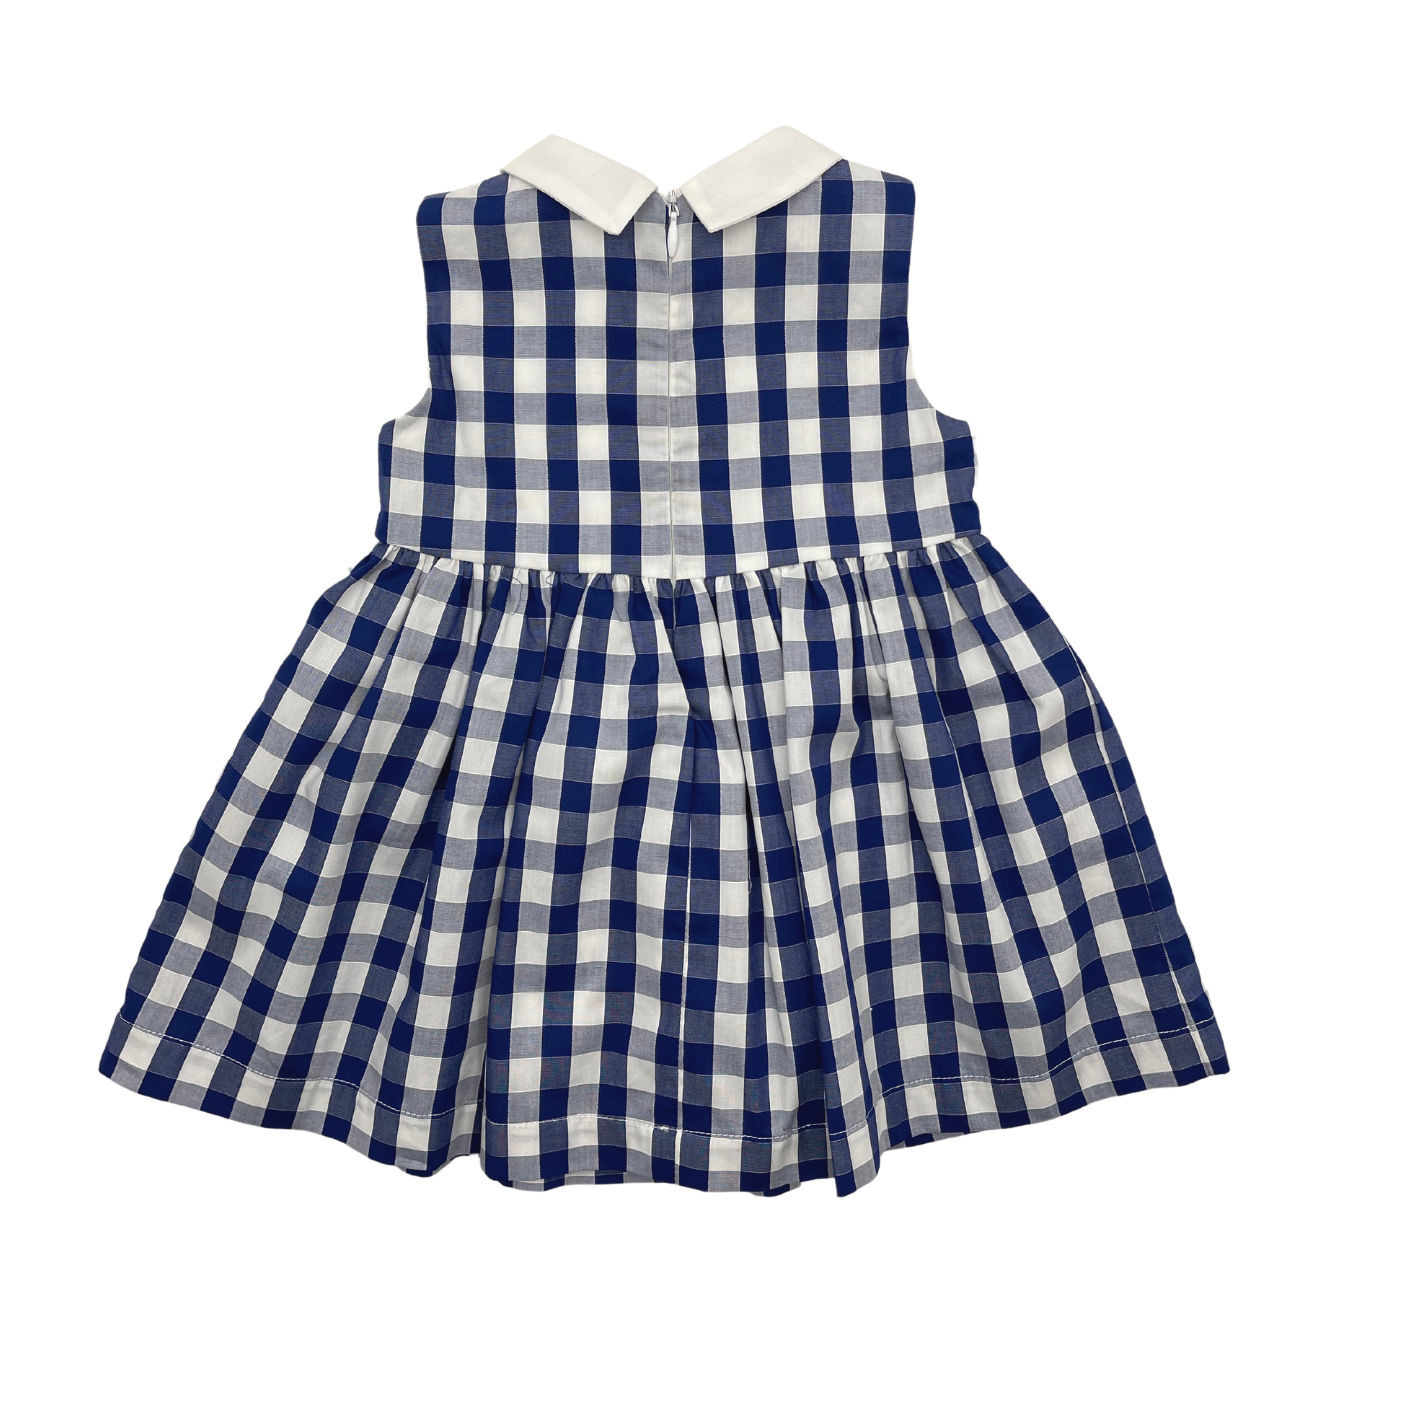 COCCOBIRILLO BY BABY GRAZIELLA - Blue checkered dress - 1 year